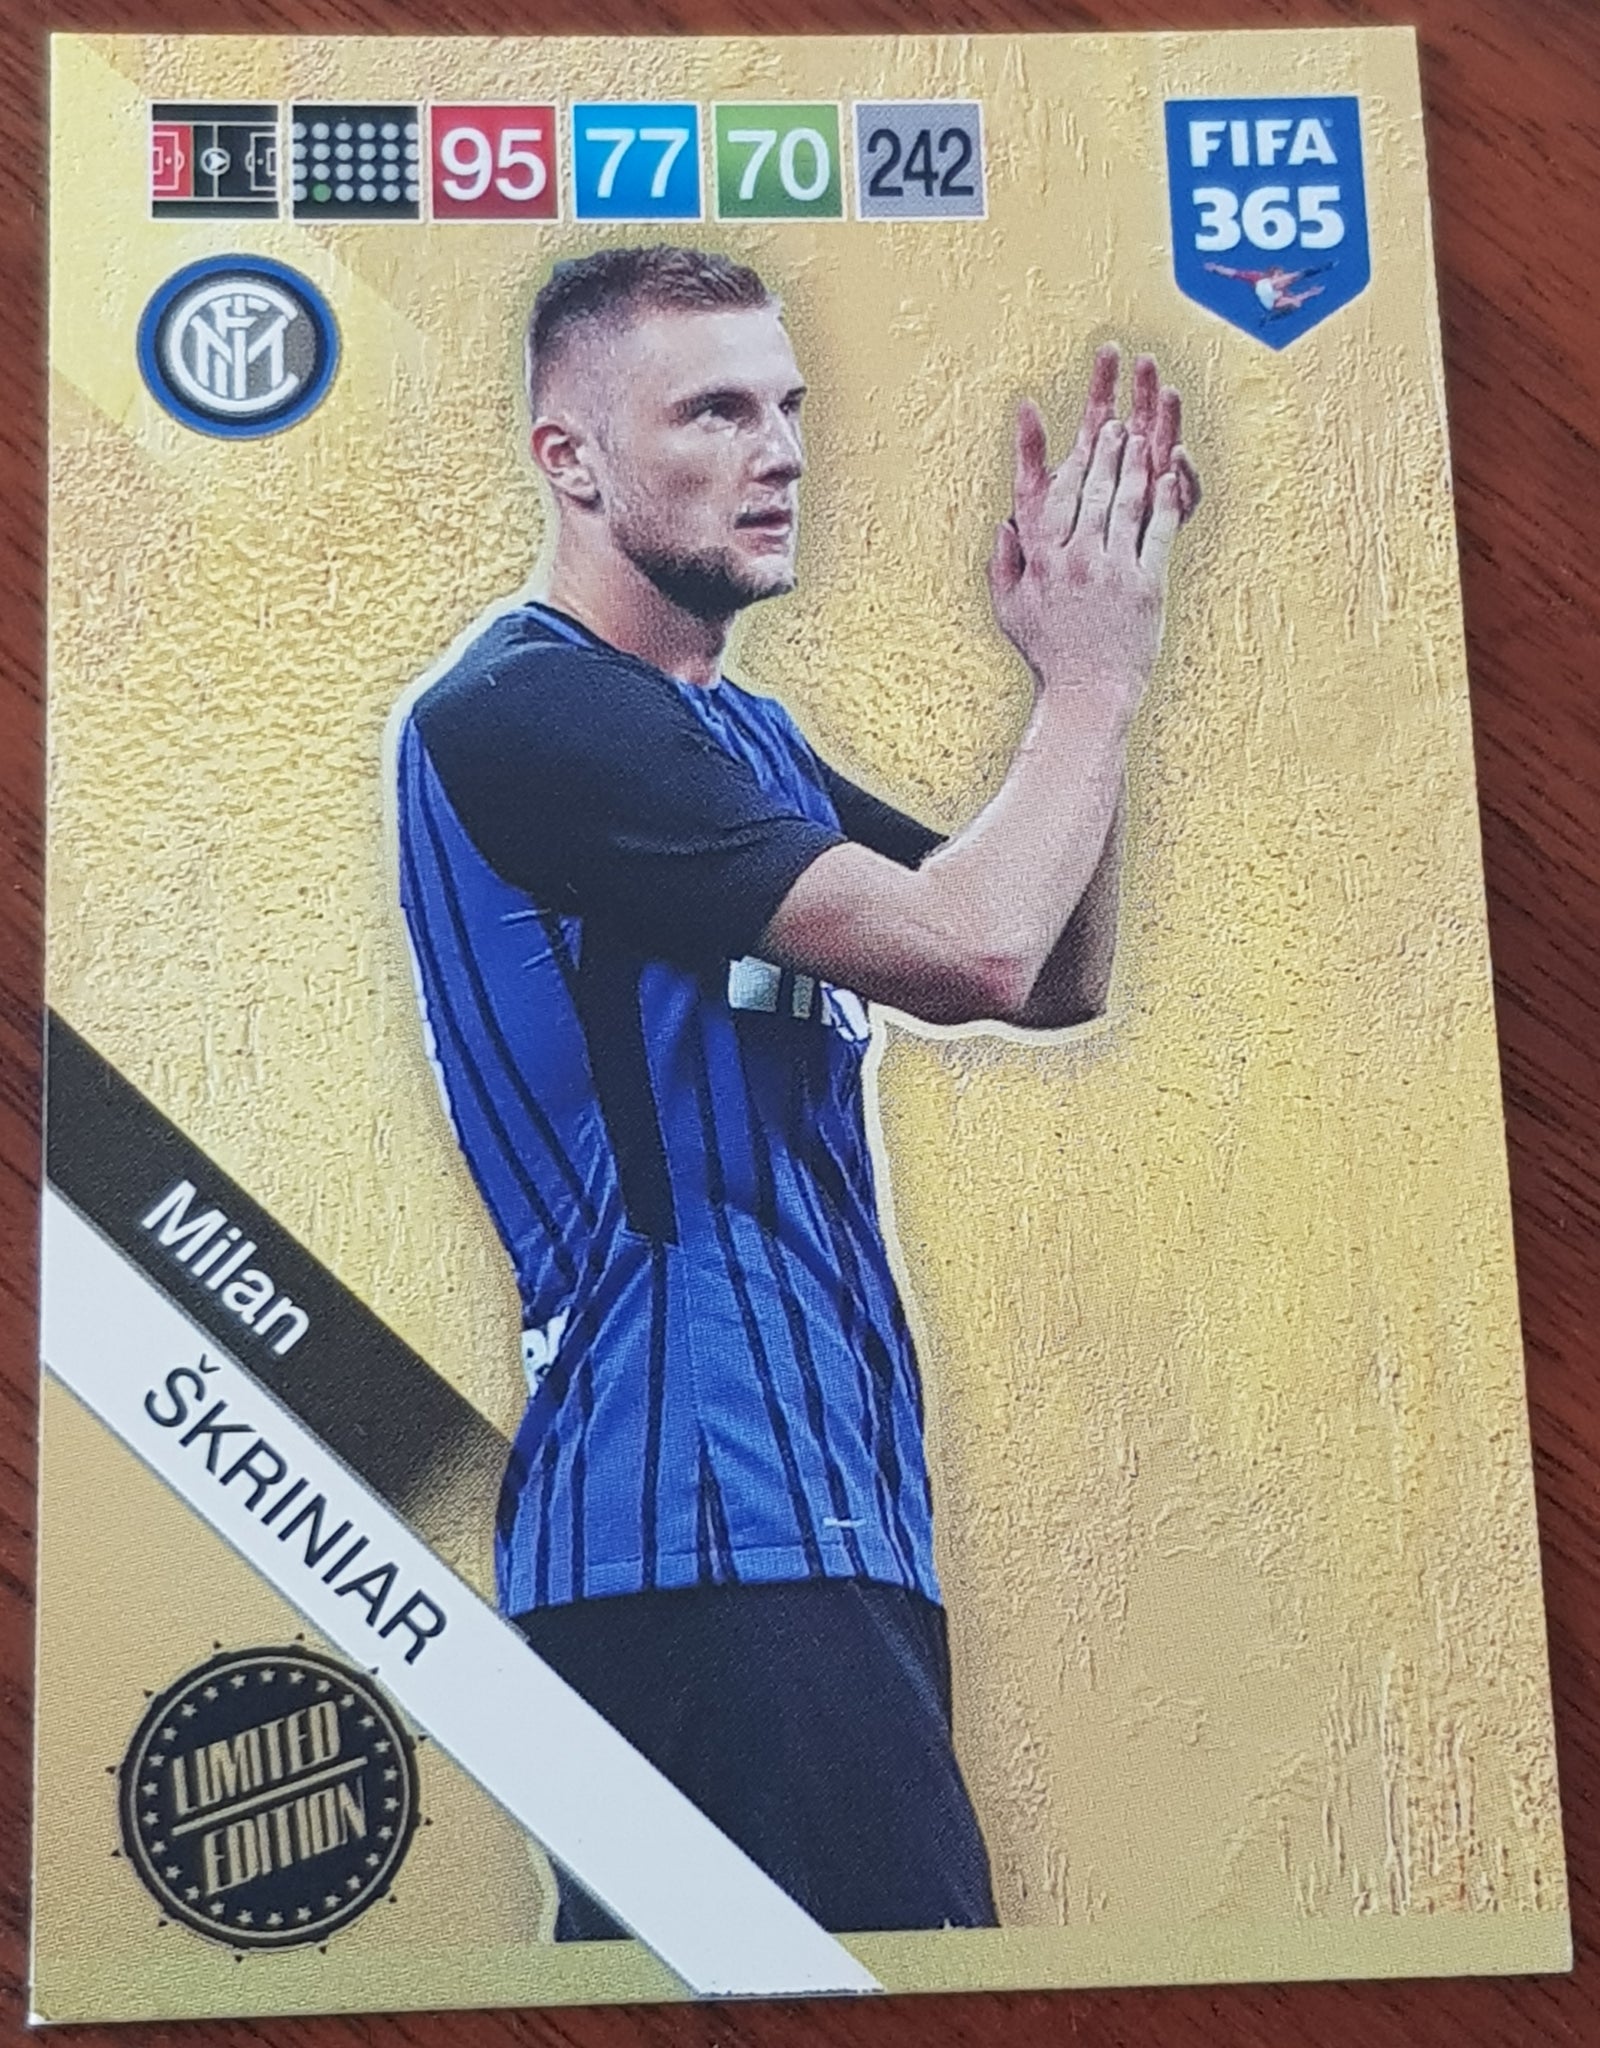 2018 Panini Adrenalyn FIFA 365 Milan Skriniar Limited Edition Trading Card